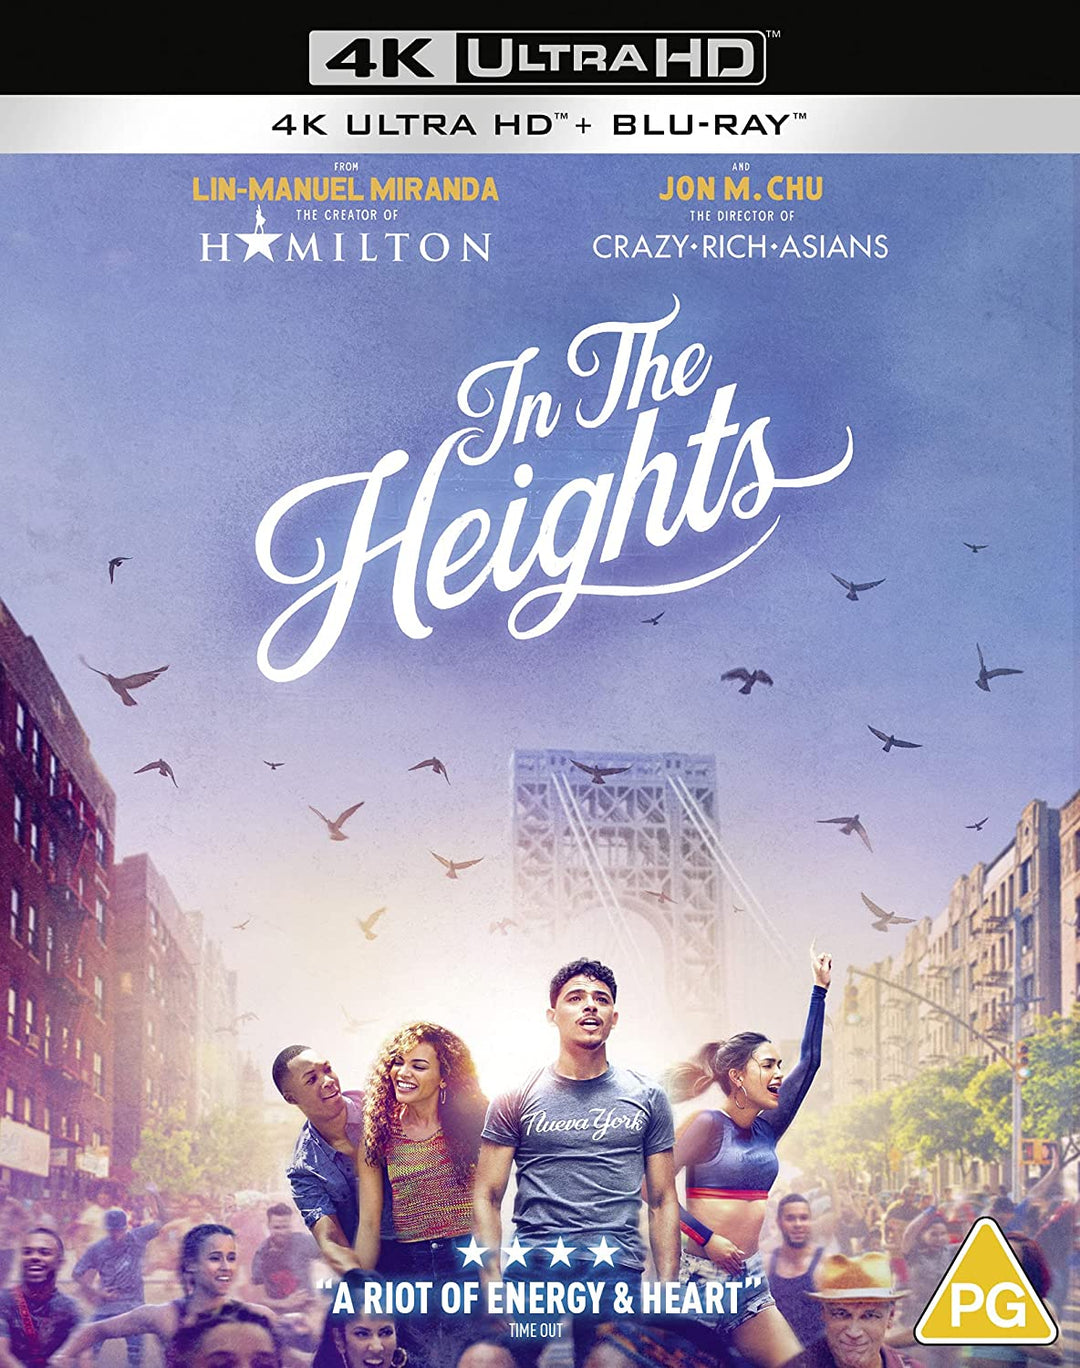 In The Heights [4K Ultra HD] [2021] [Region Free] - Musical/Drama [Blu-ray]